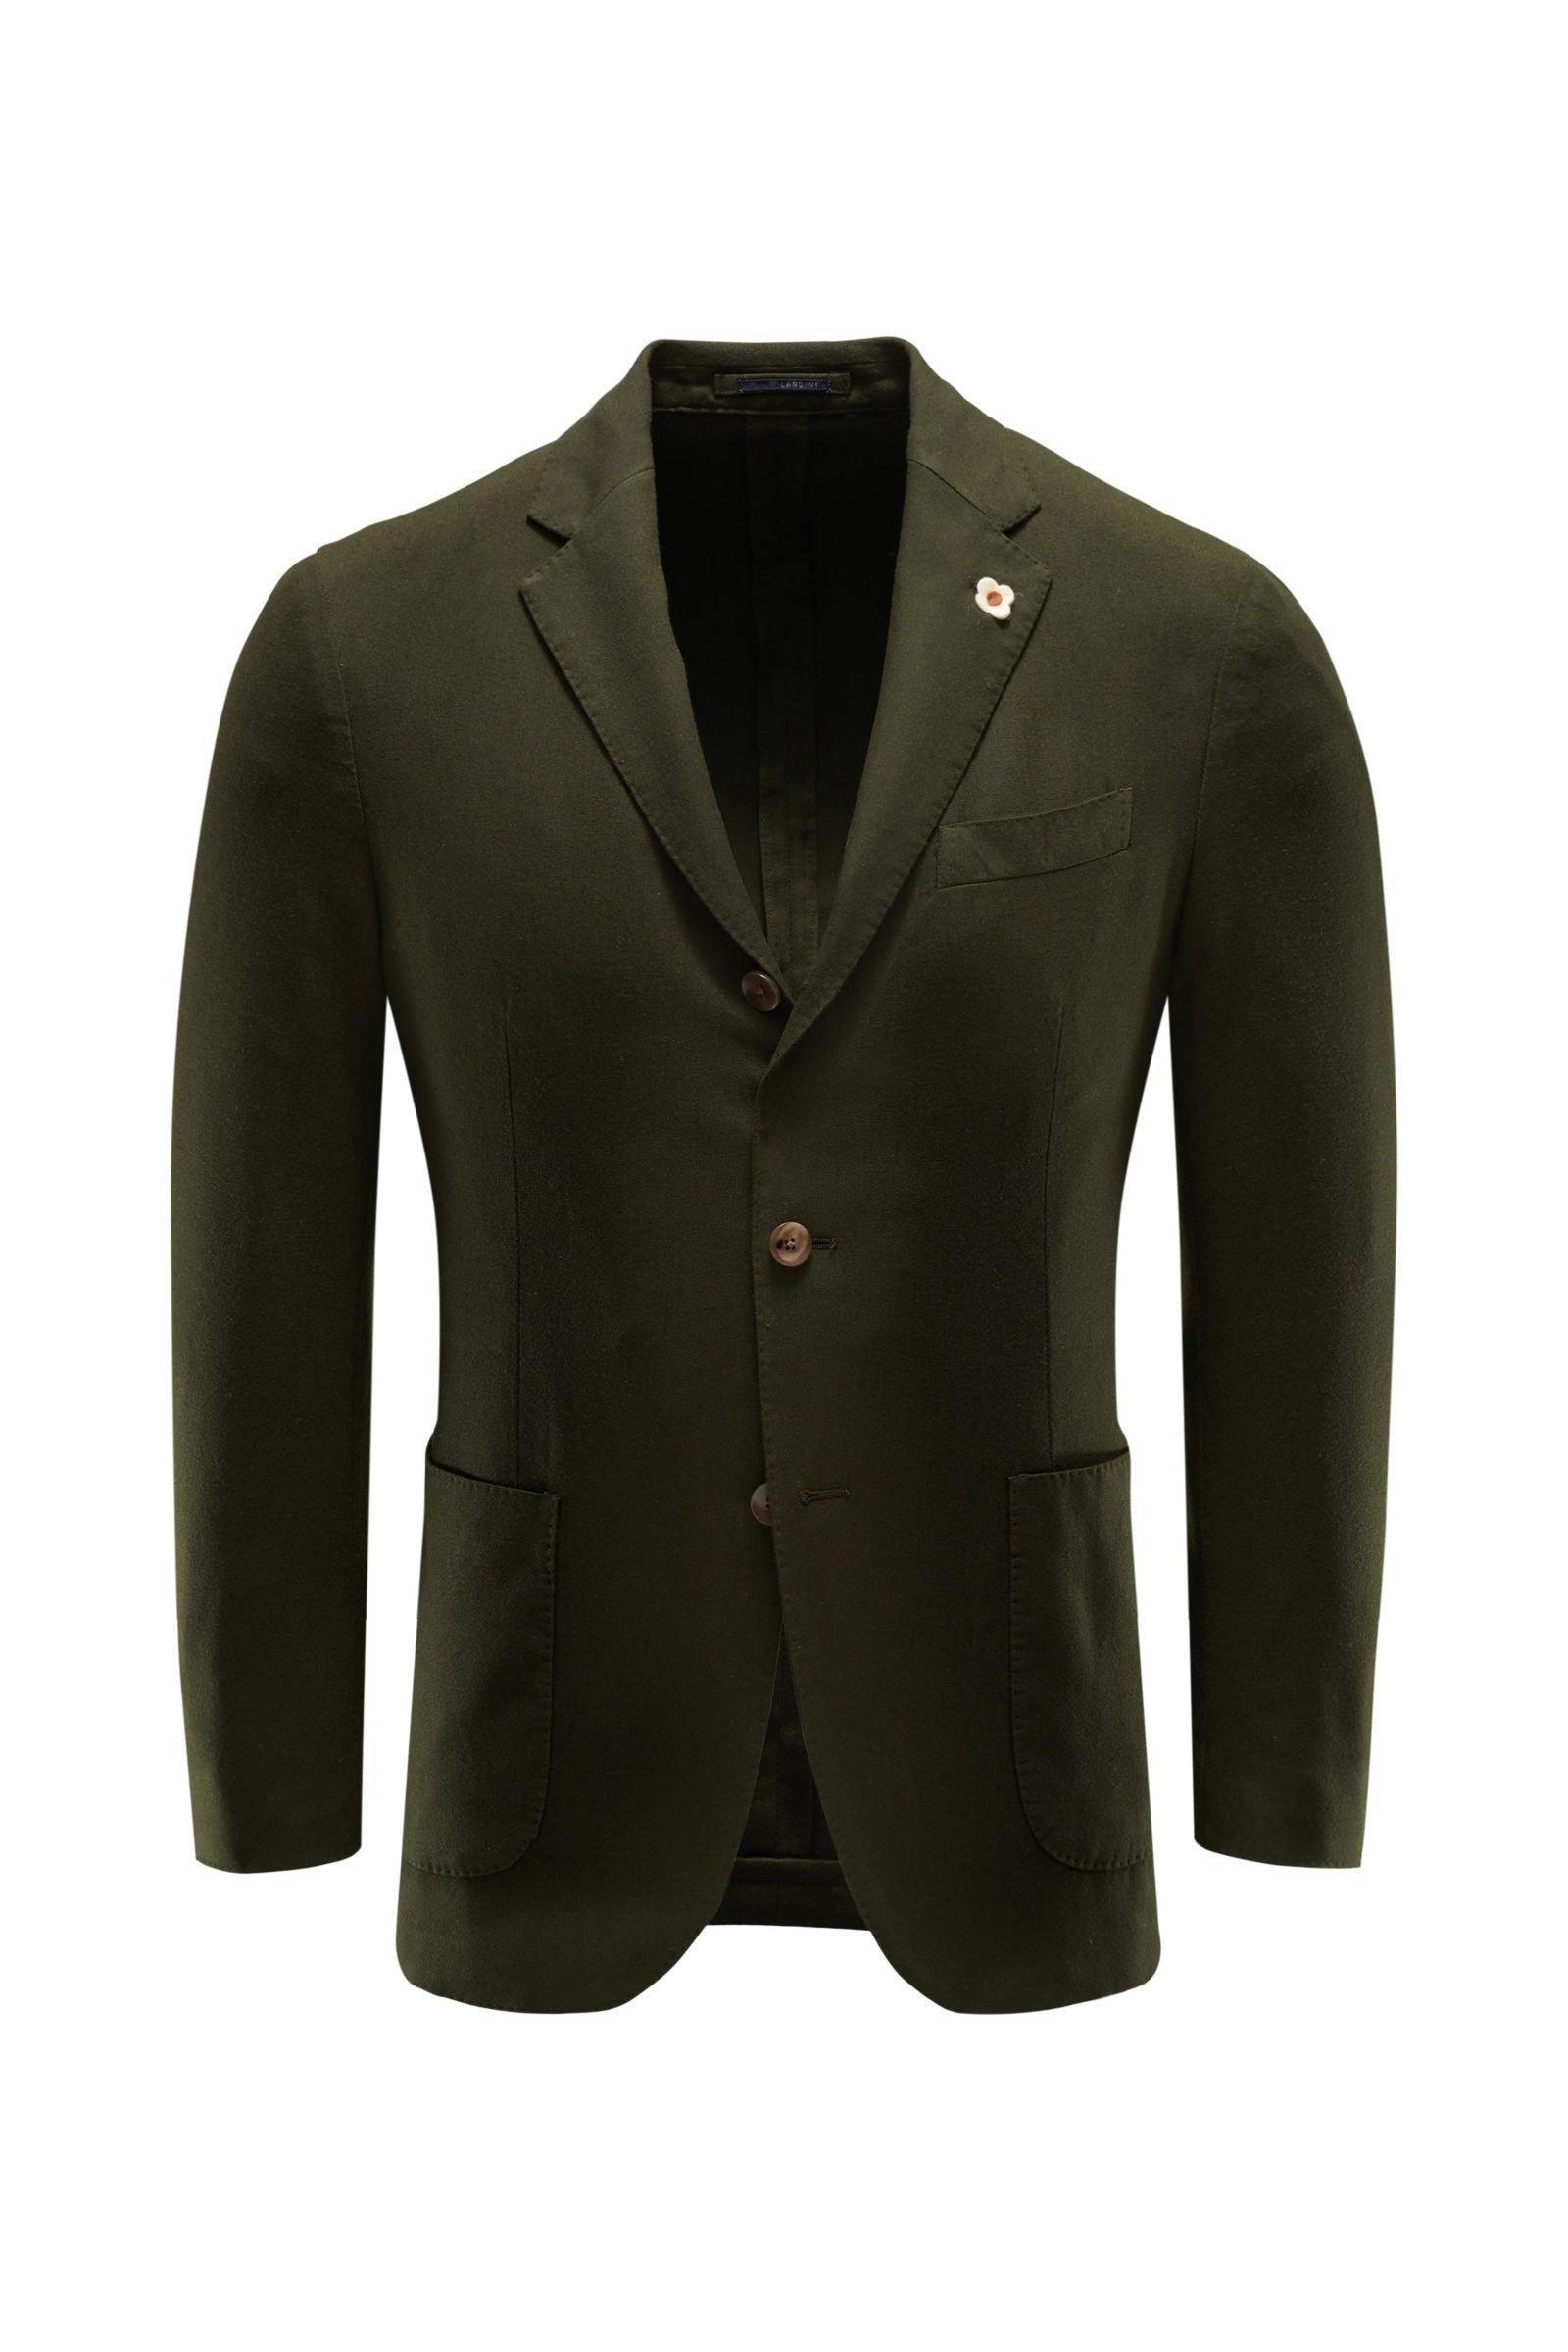 Cashmere smart-casual jacket dark olive